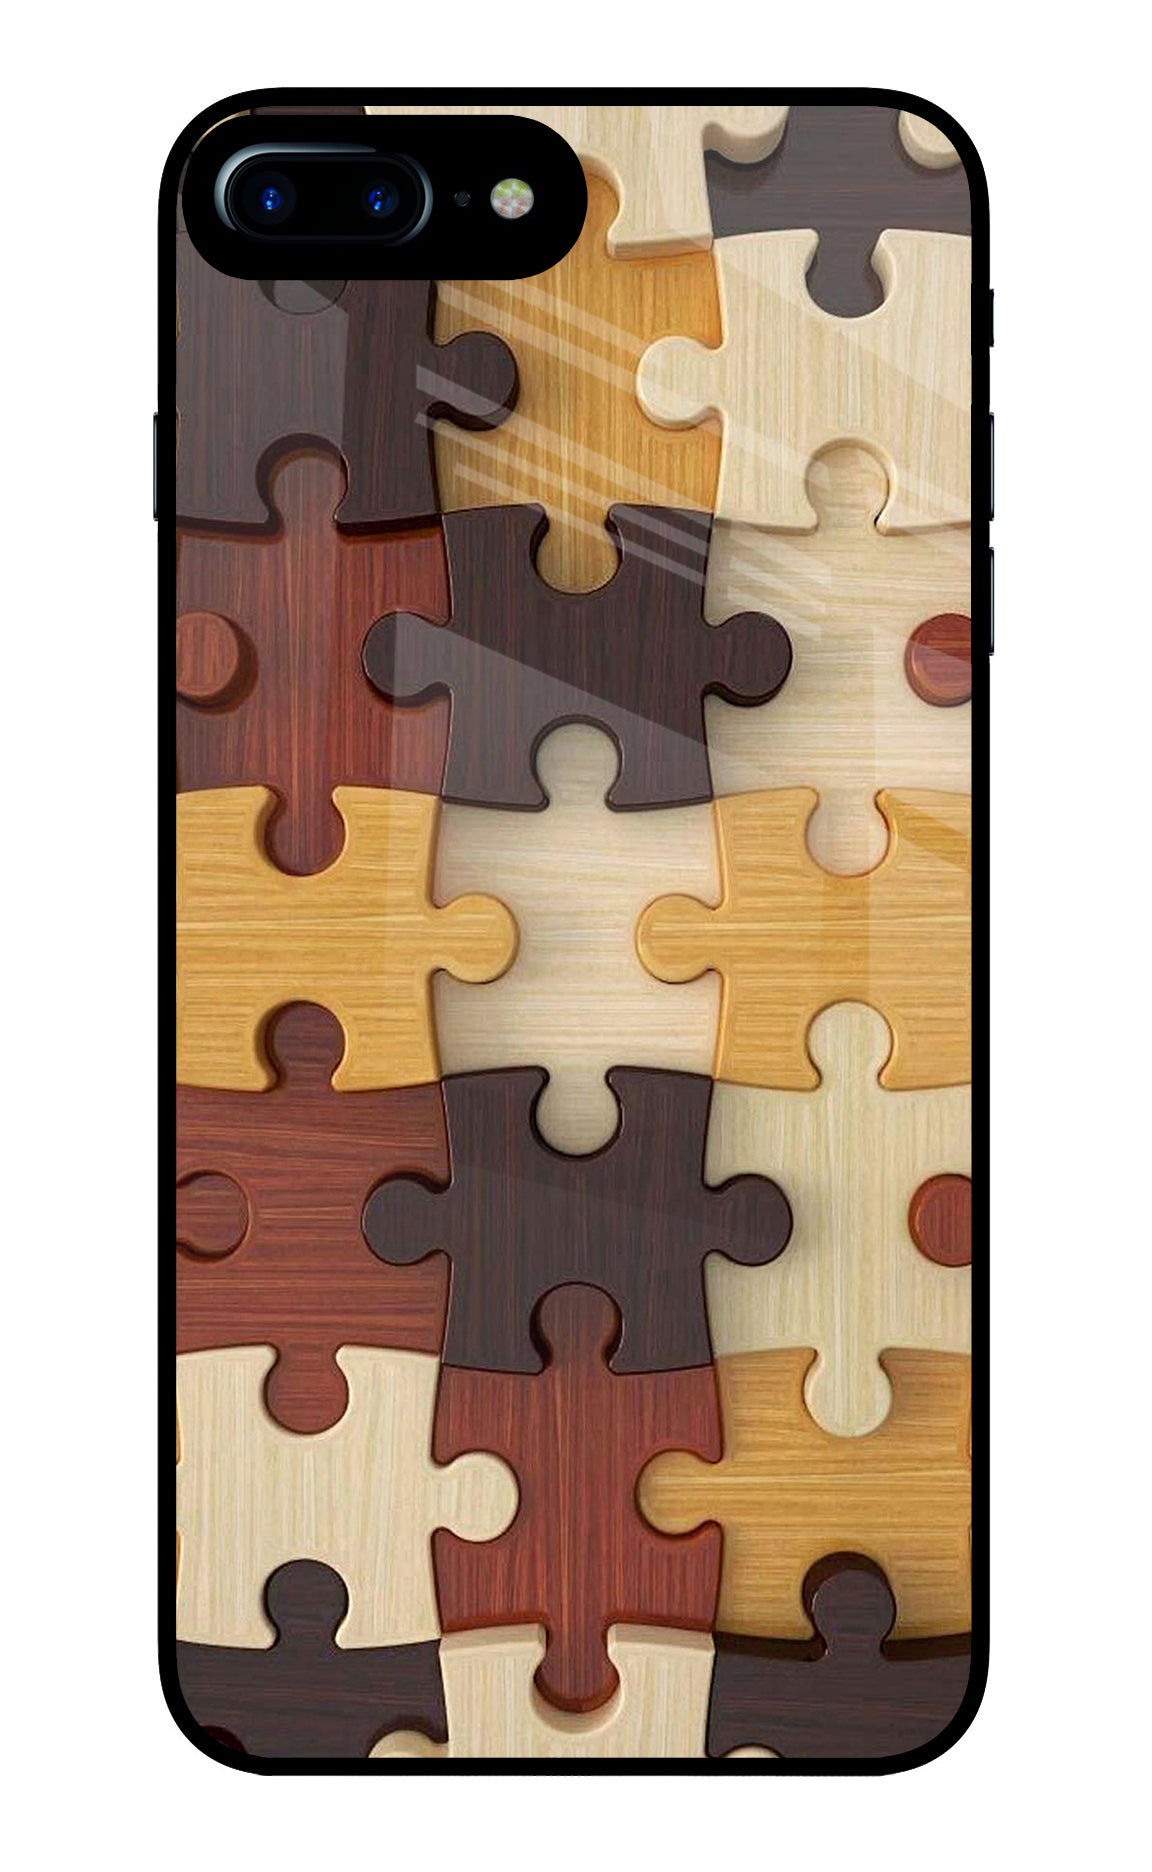 Wooden Puzzle iPhone 8 Plus Glass Case